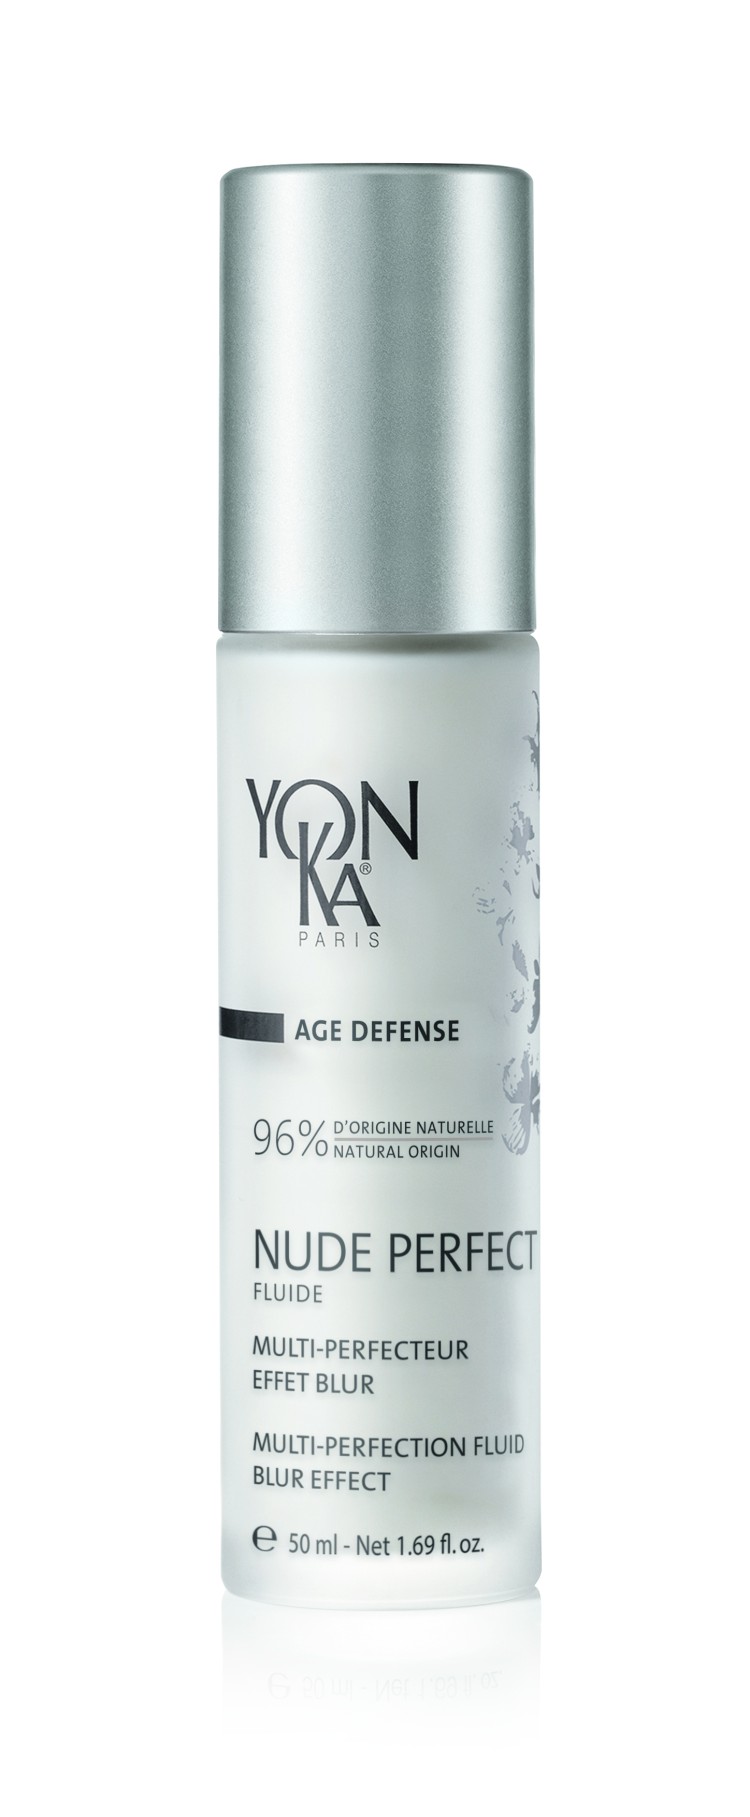 Yon-ka Nude perfect fluide 